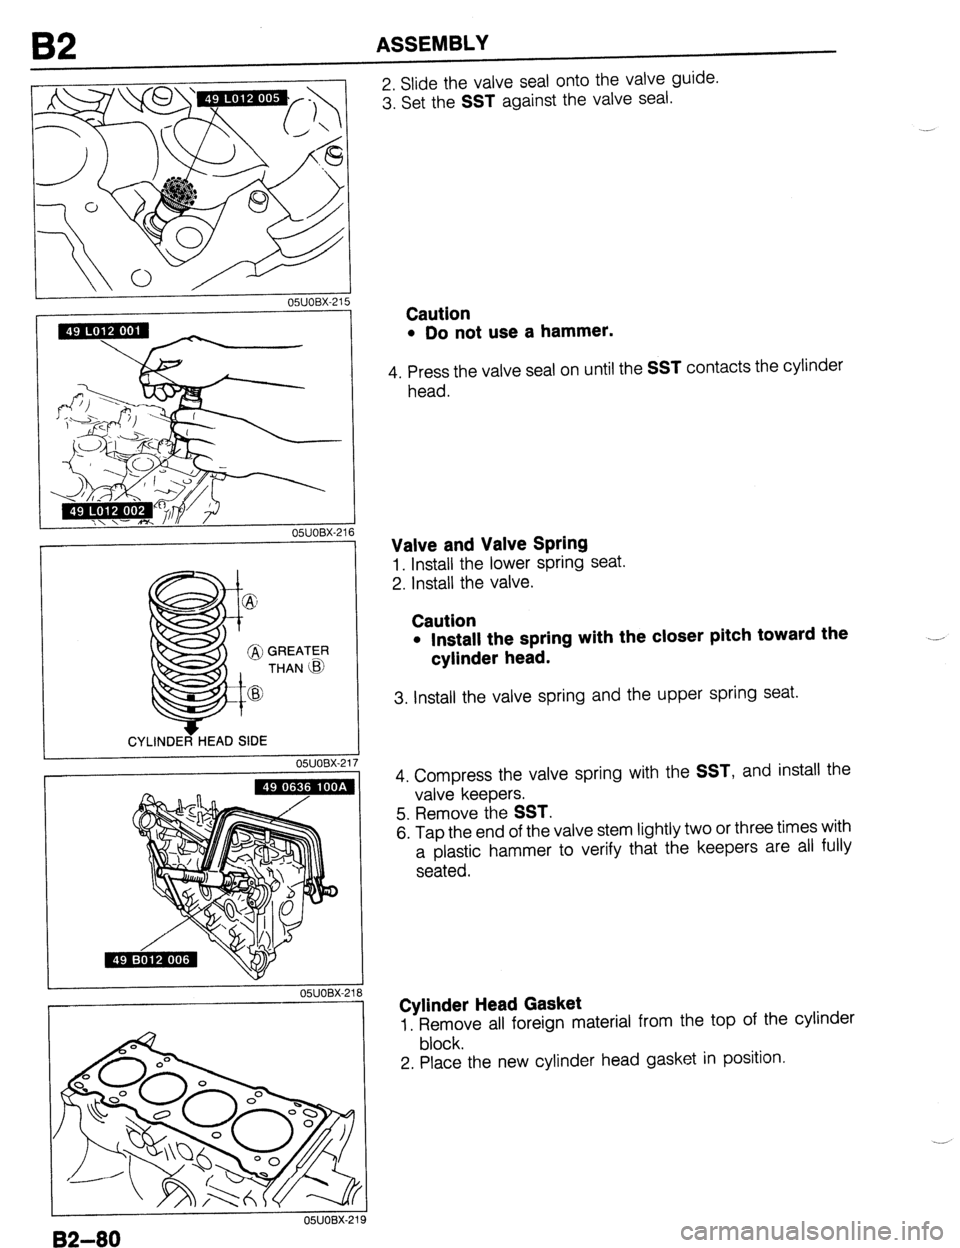 MAZDA PROTEGE 1992  Workshop Manual 62 ASSEMBLY 
I OWOBX-21! 
I CYLINDER HEAD SIDE 
05UOBX-2 
I 
05UOBX-21 6 
i 
17 
05UOBX-2 
2. Slide the valve seal onto the valve guide. 
3. Set the 
SST against the valve seal. 
Caution 
l Do not use